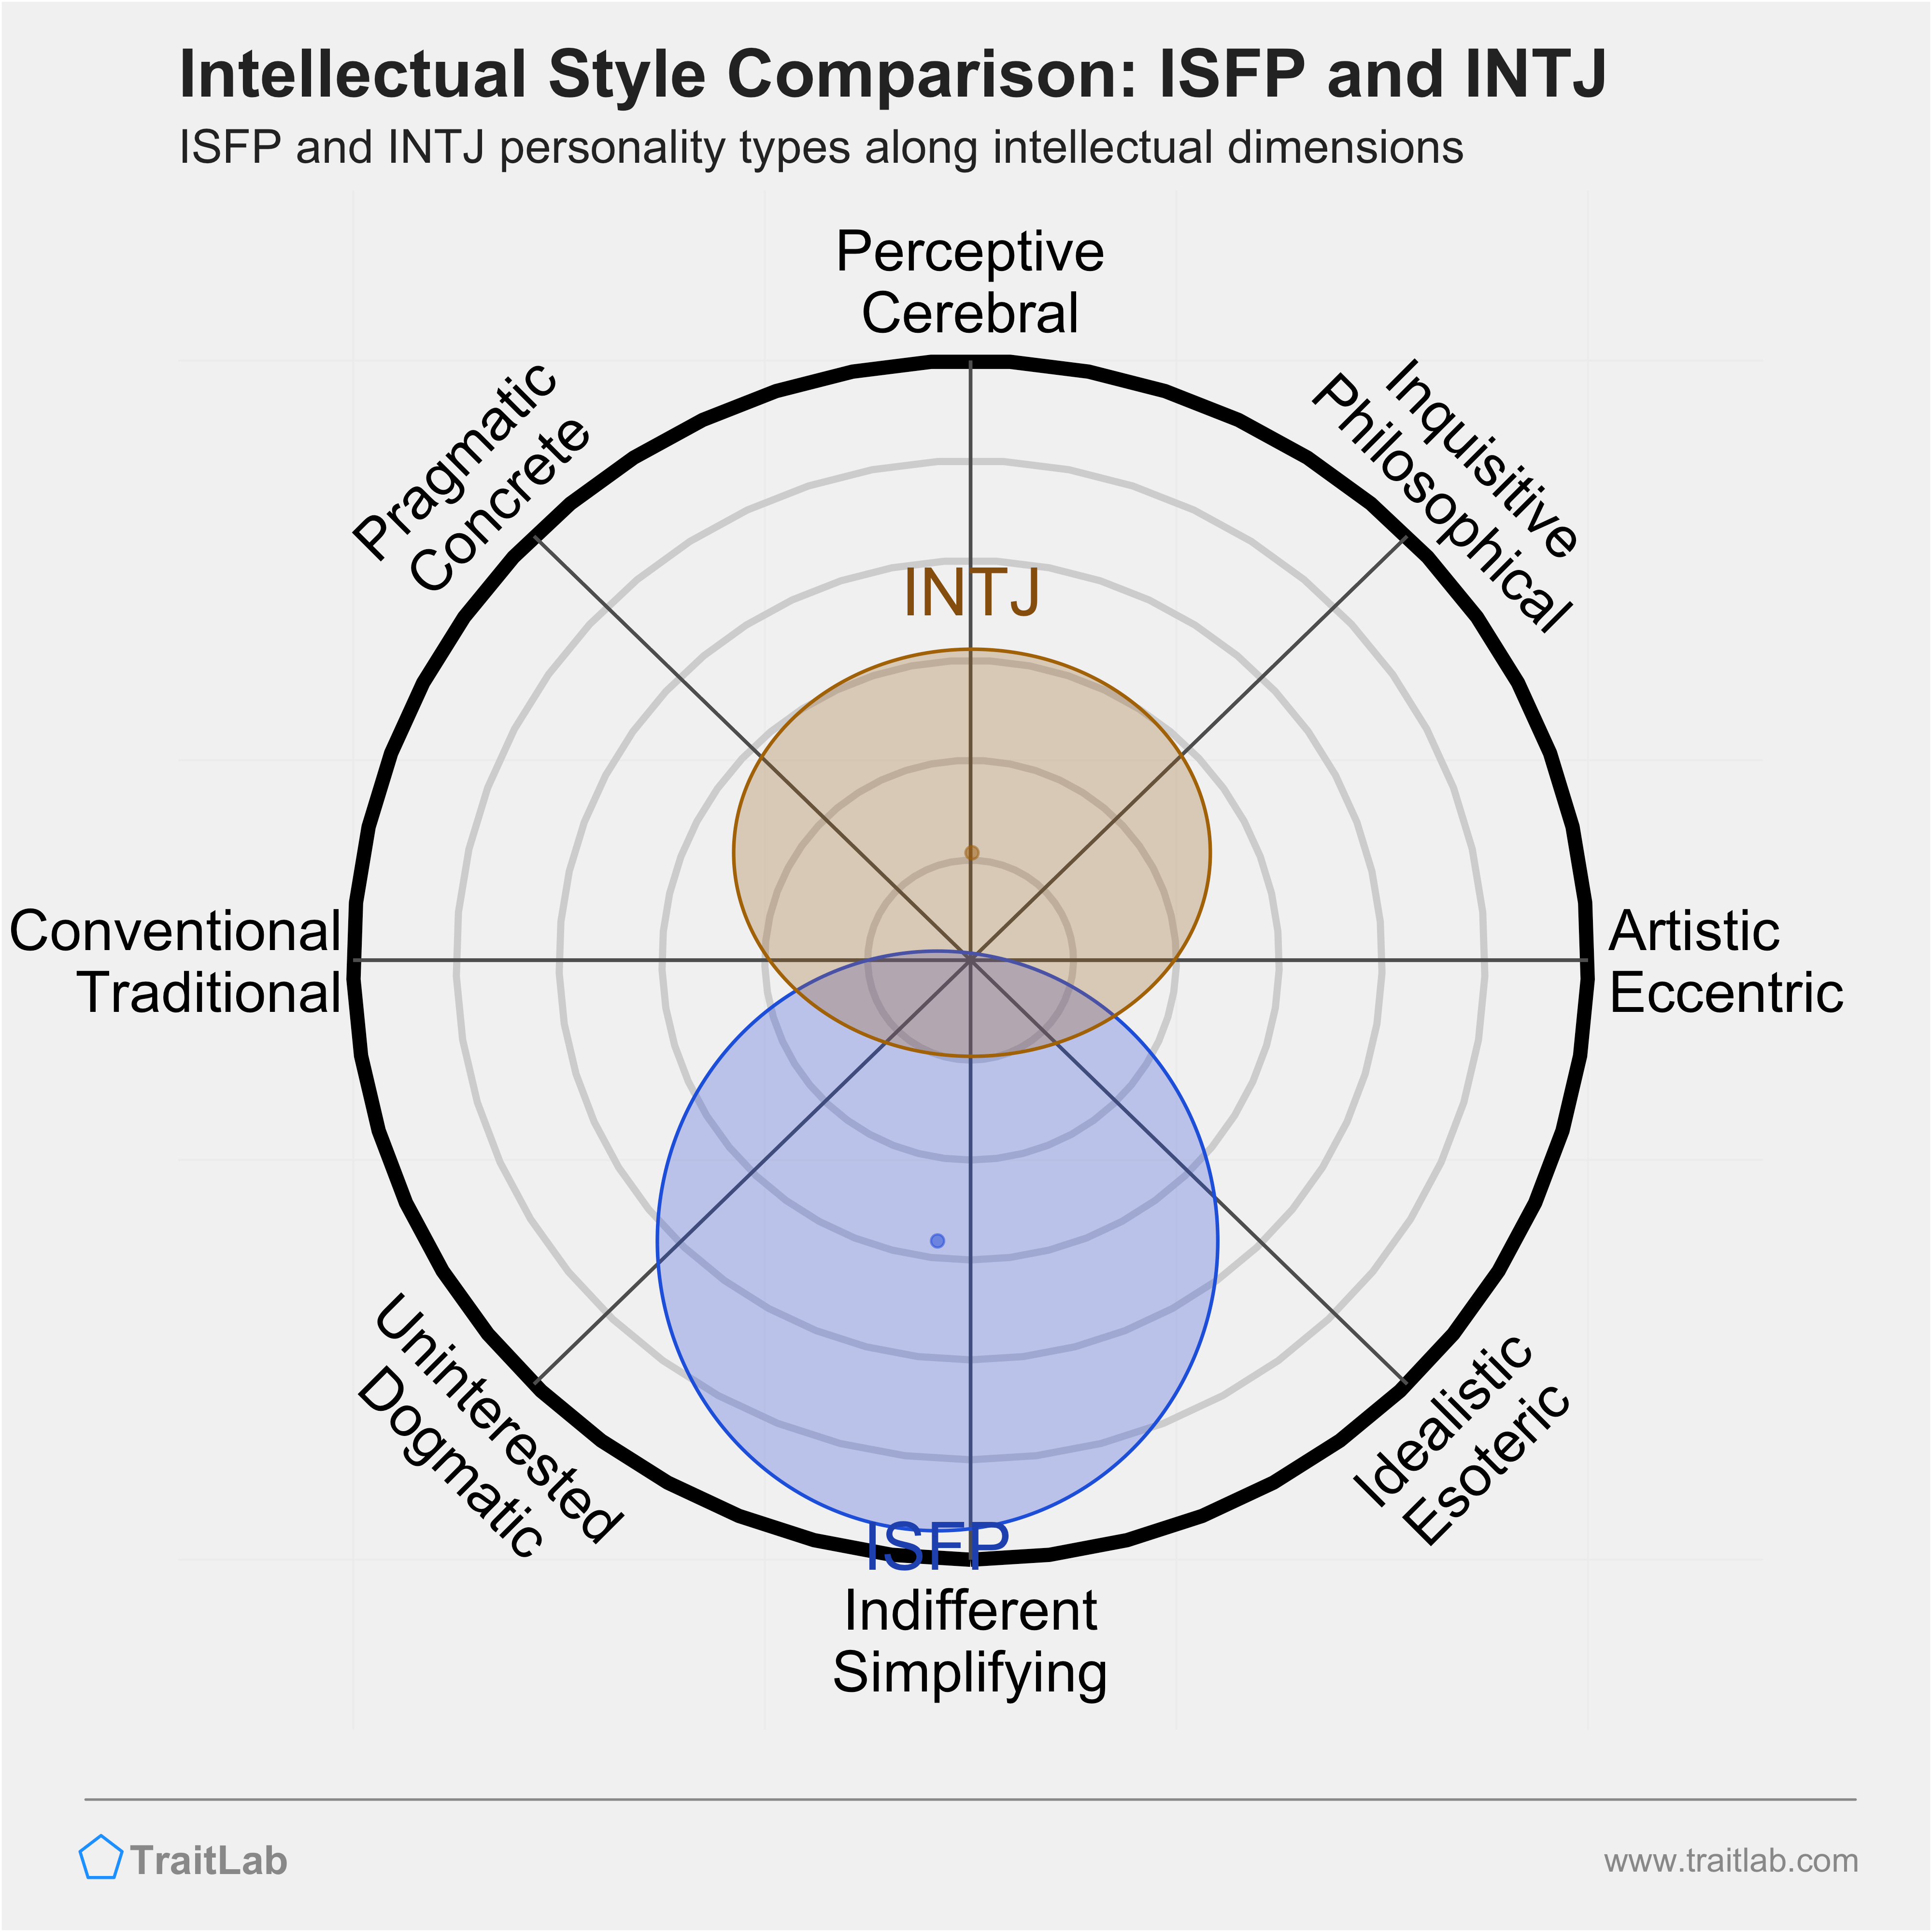 ISFP and INTJ comparison across intellectual dimensions